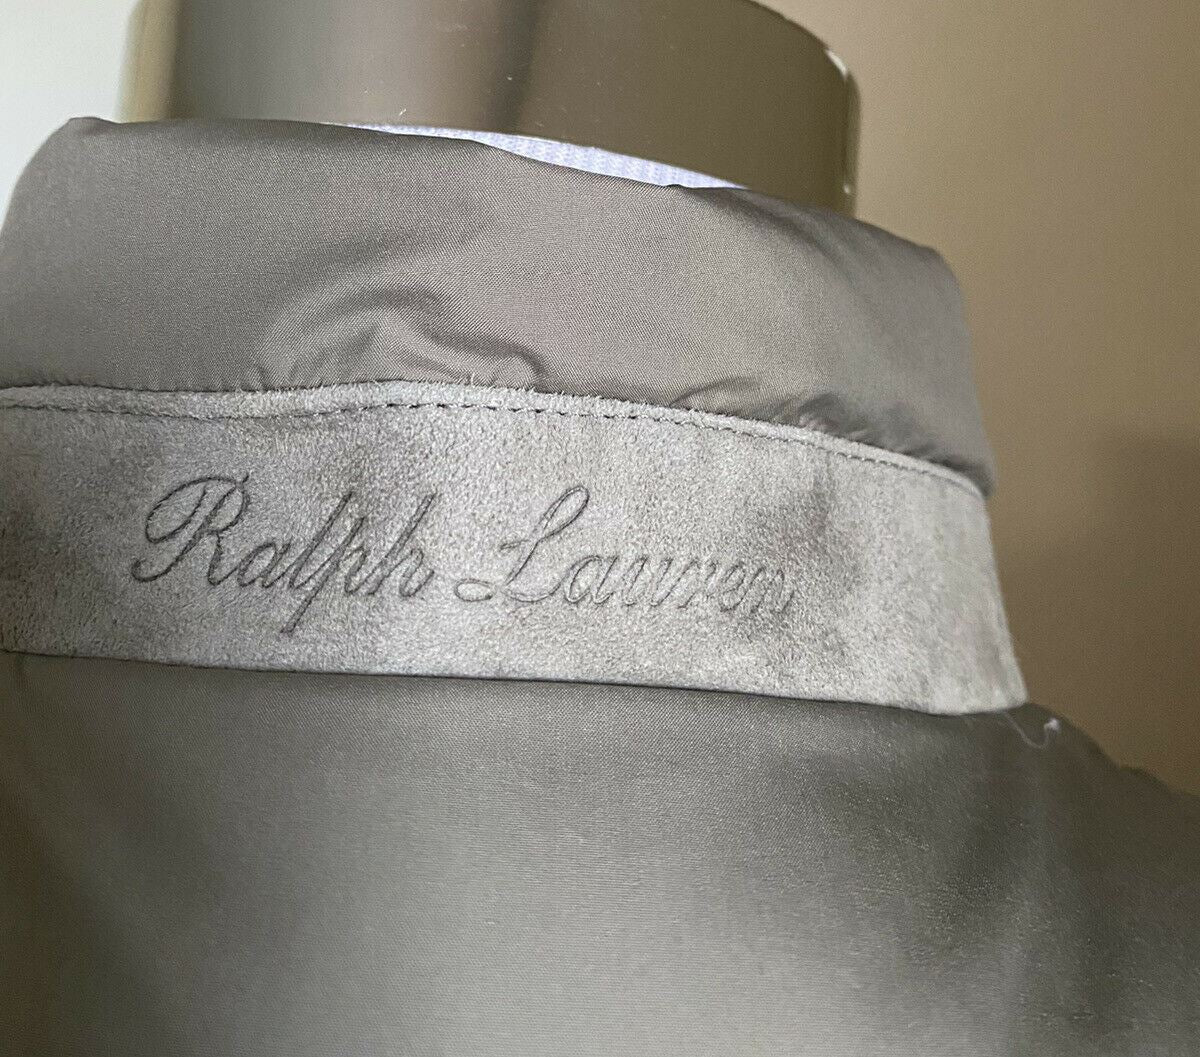 Neu $995 Ralph Lauren Purple Label Men Whitwell Puffer Vest LT Grey S